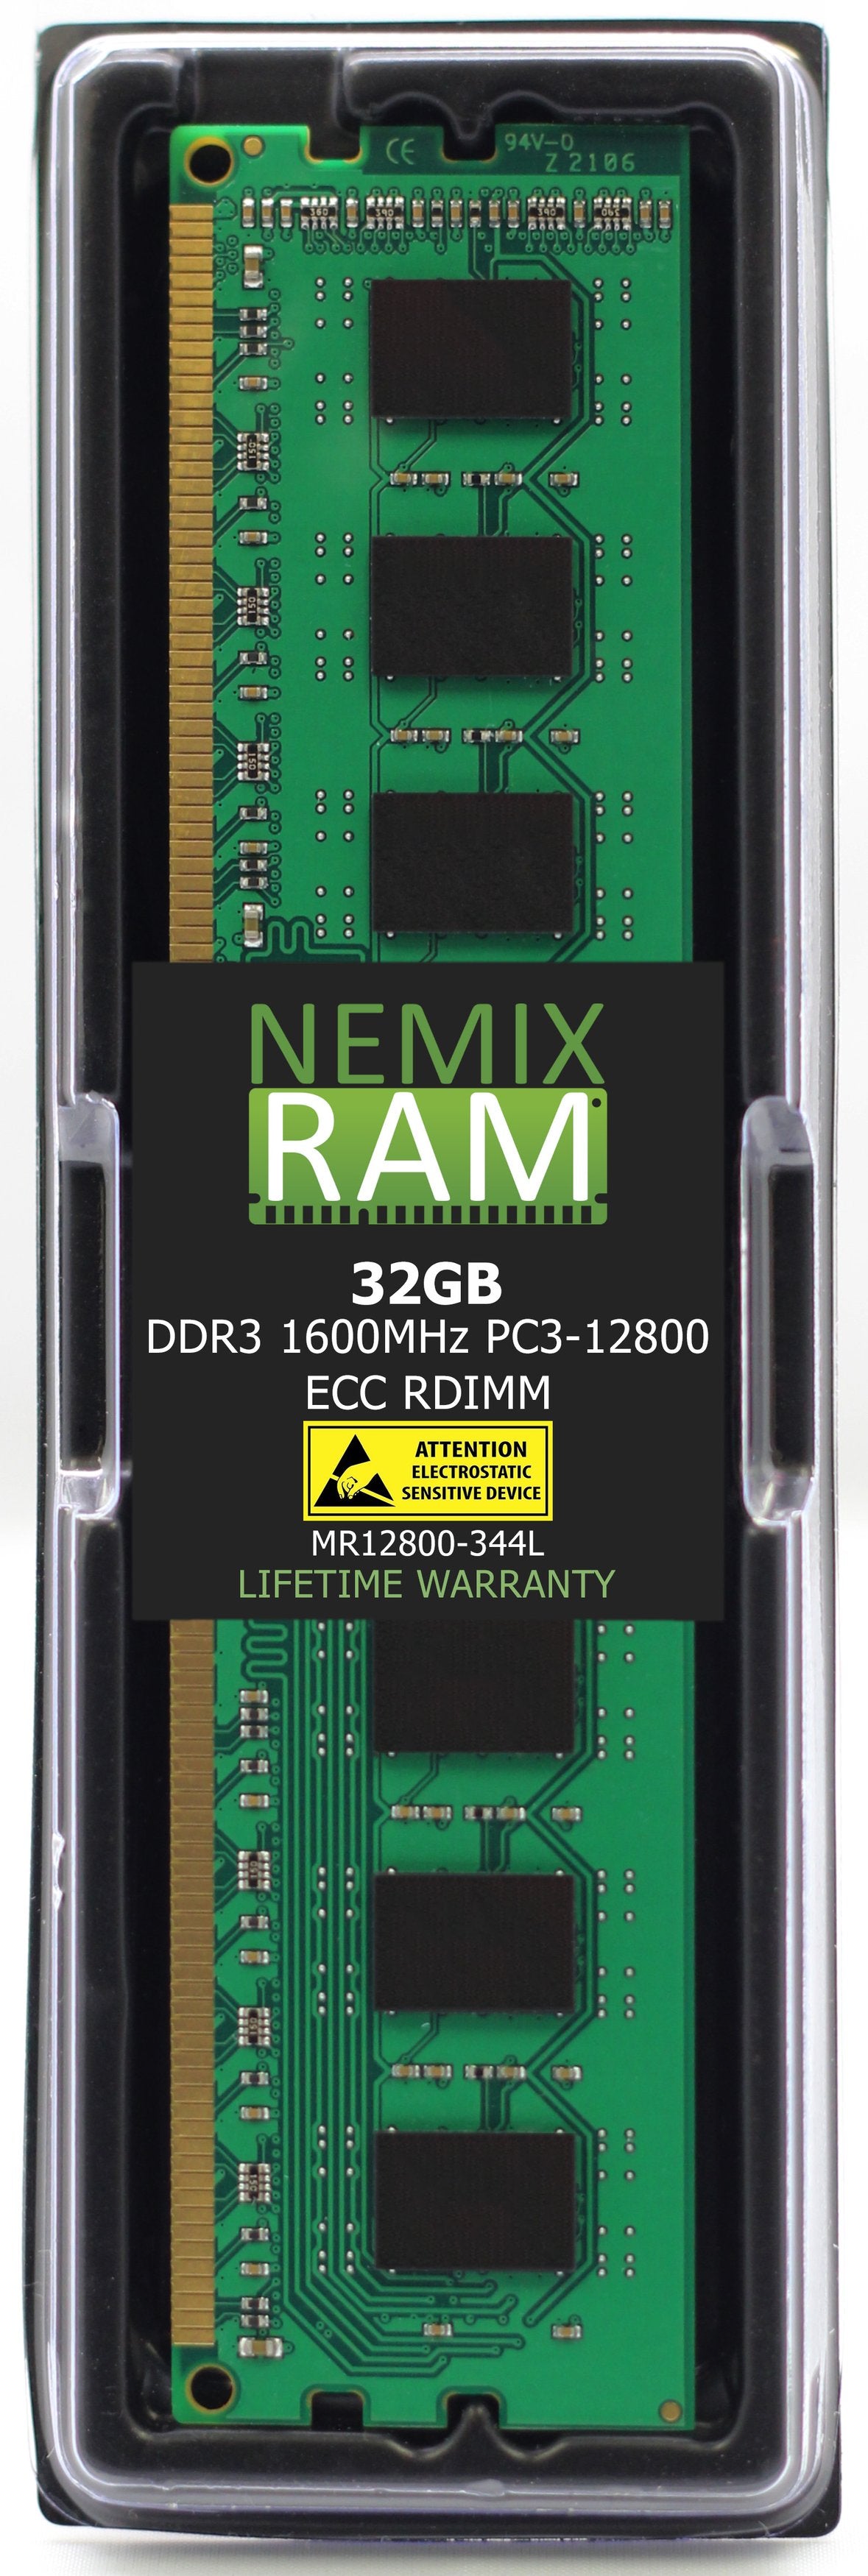 NEC Express5800 T120d Memory Module N8102-482F 32GB DDR3 1600MHZ PC3-12800 RDIMM